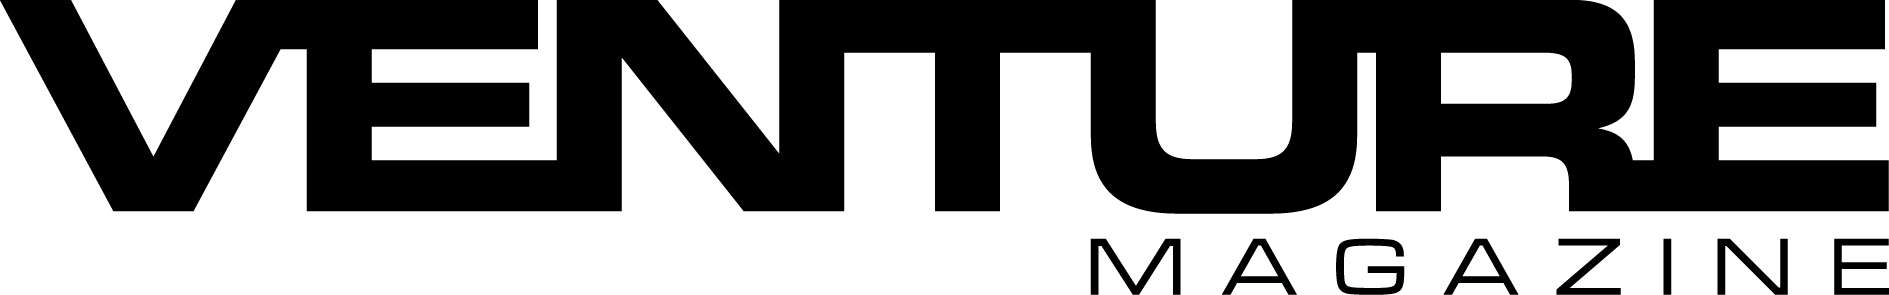 Venture_Logo_BW-1